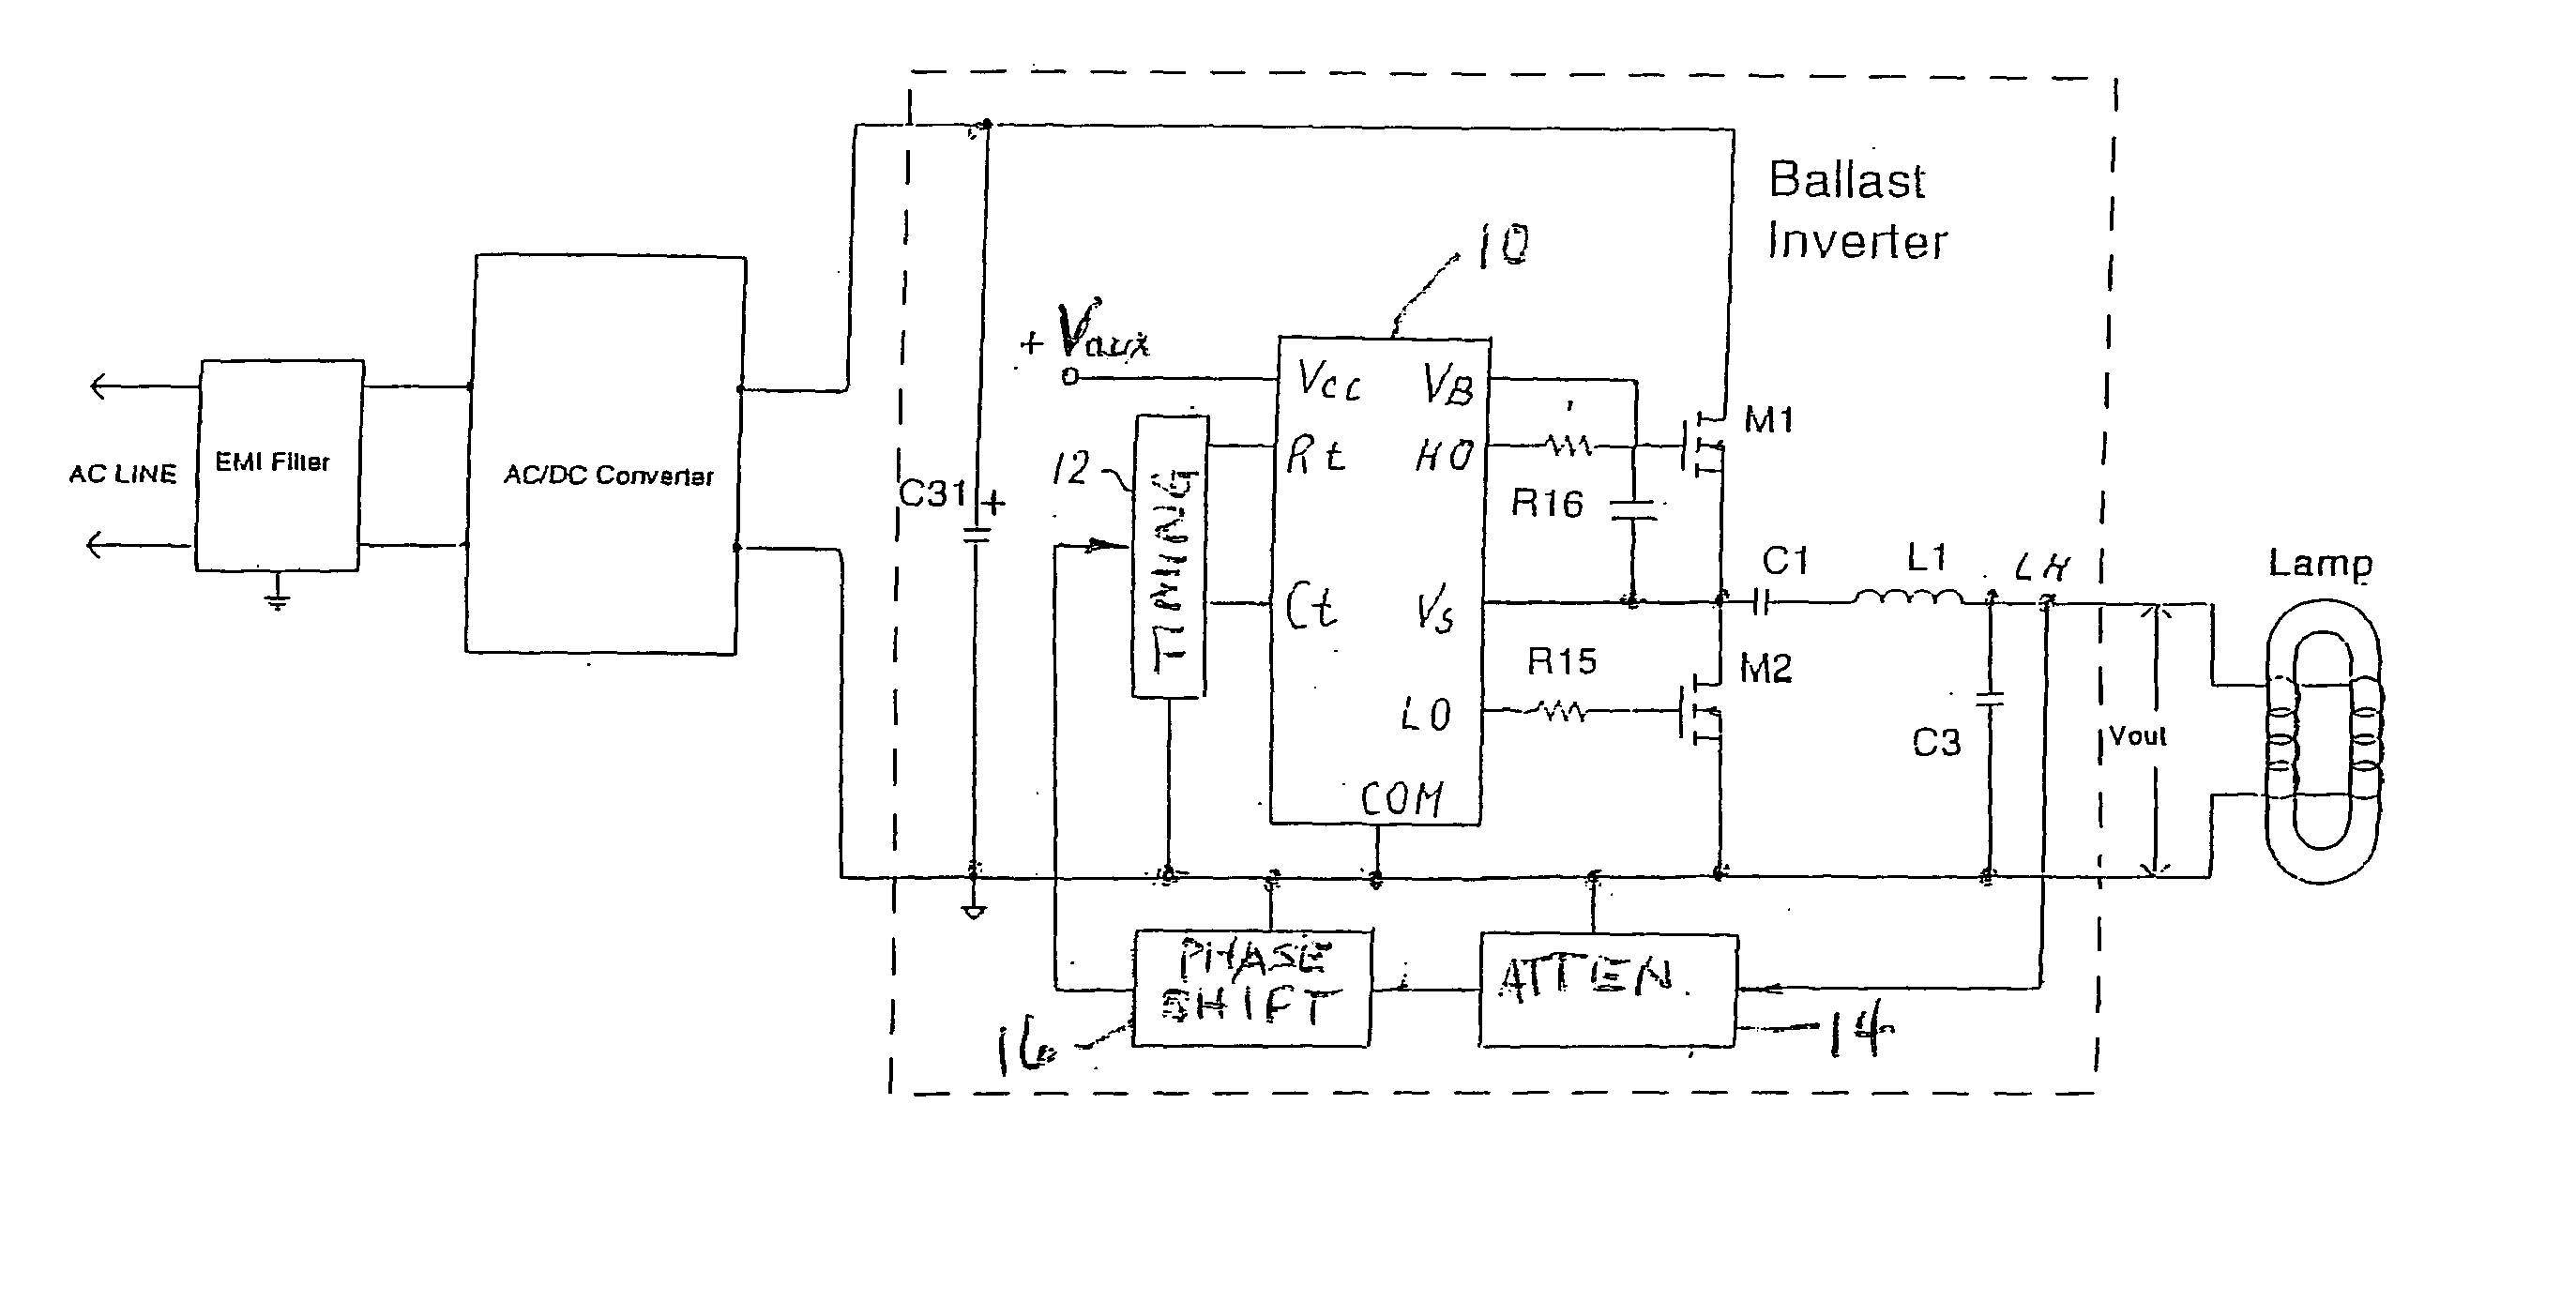 Feedback circuit and method of operating ballast resonant inverter